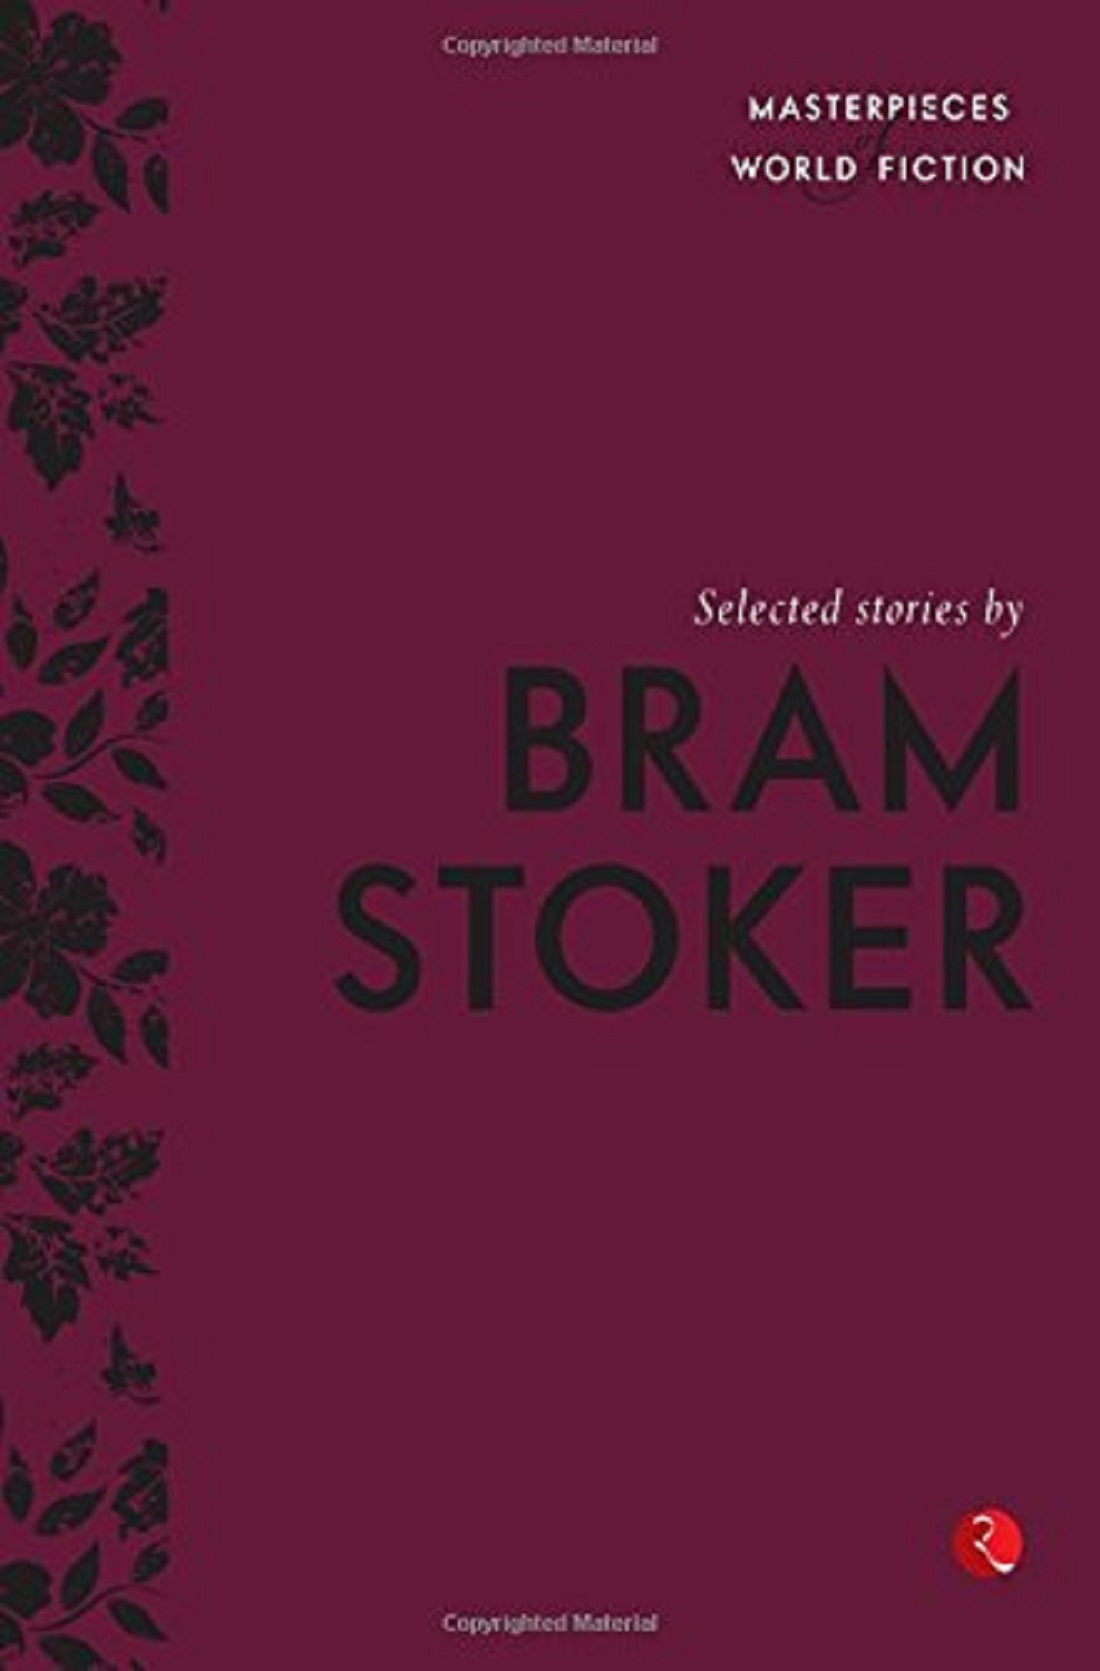 SELECTED STORIES BY BRAM STOKER